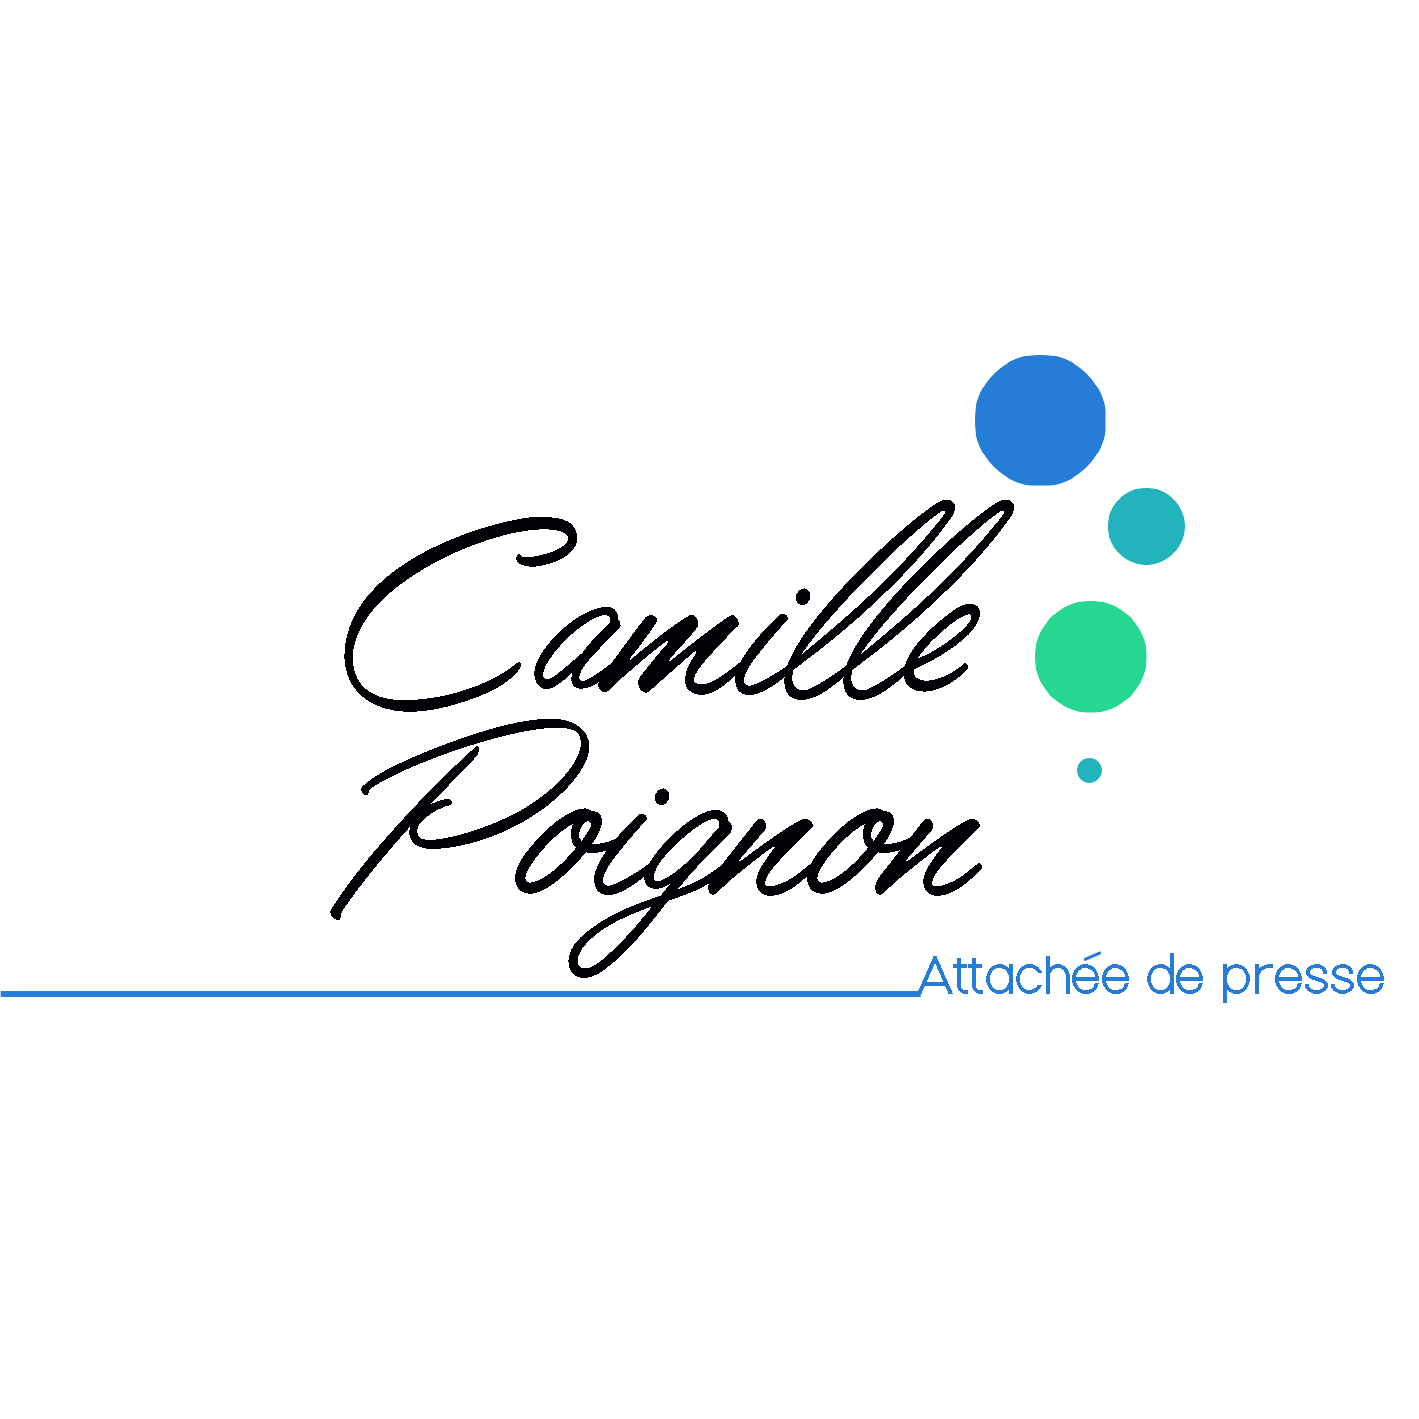 Camille Poignon attachée de presse freelance